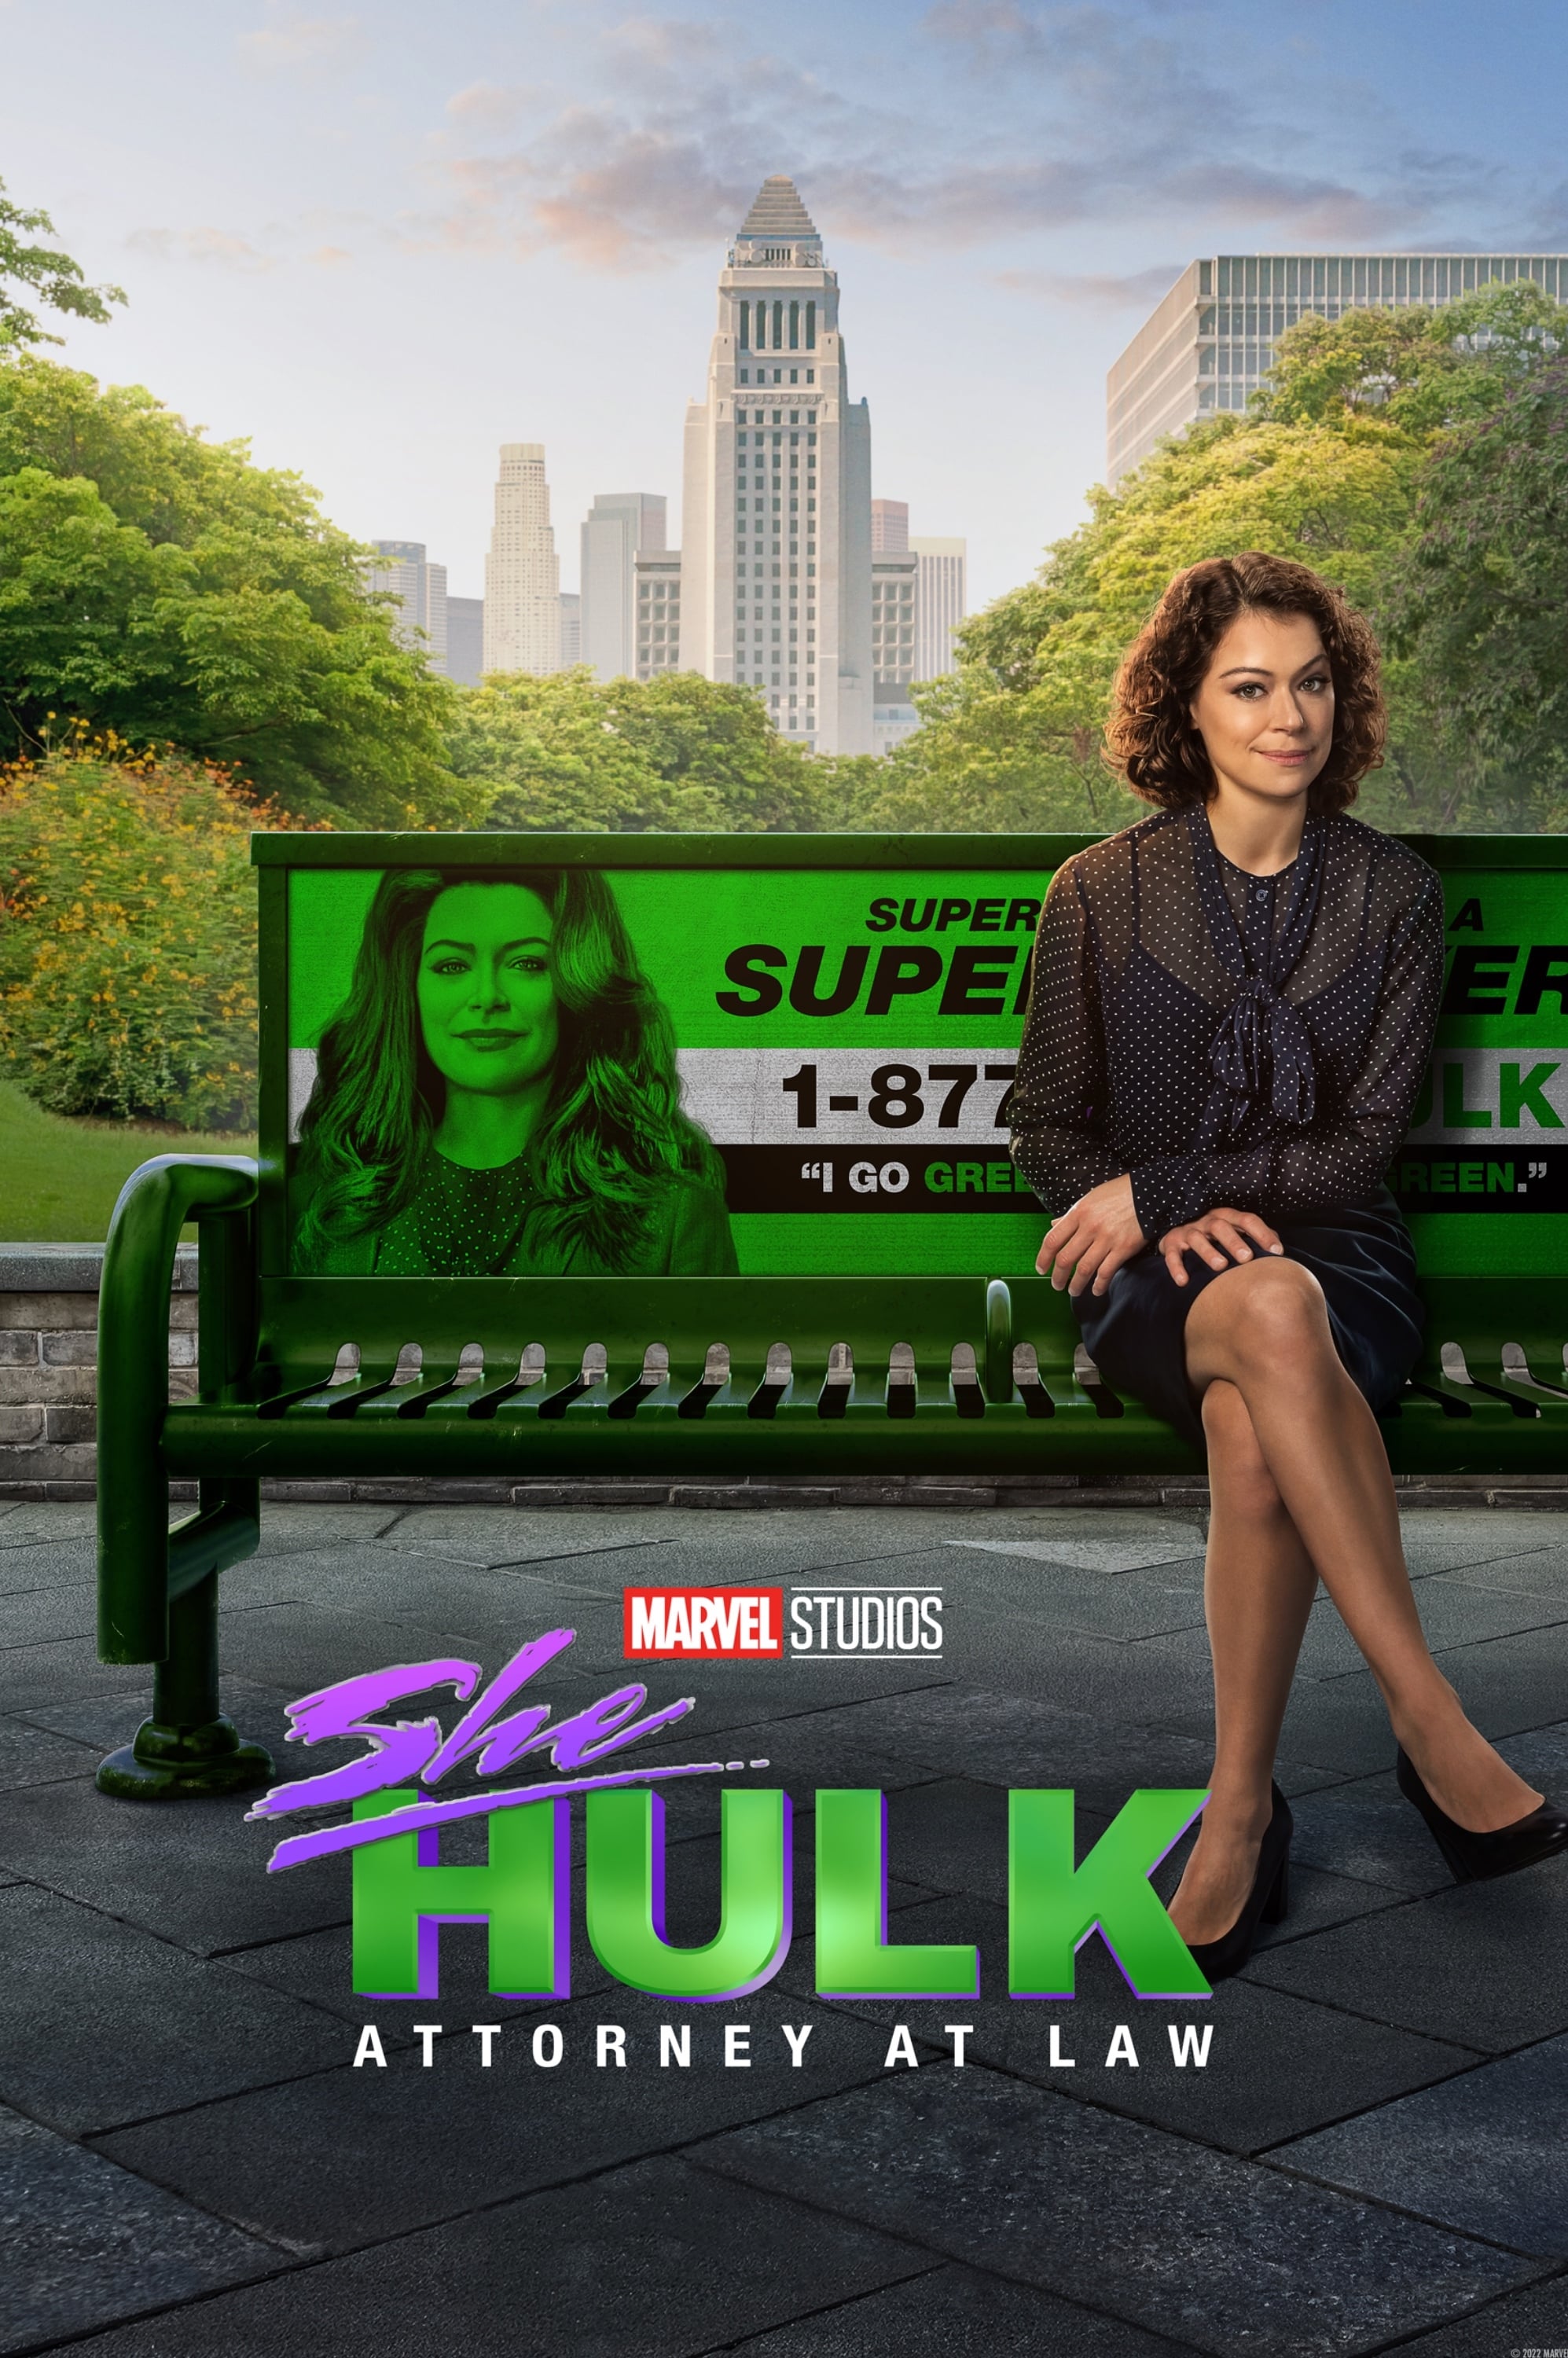 She Hulk: Attorney at Law (2022) 720p HEVC HDRip S01E06 [Dual Audio] [Hindi or English] x265 ESubs [190MB]